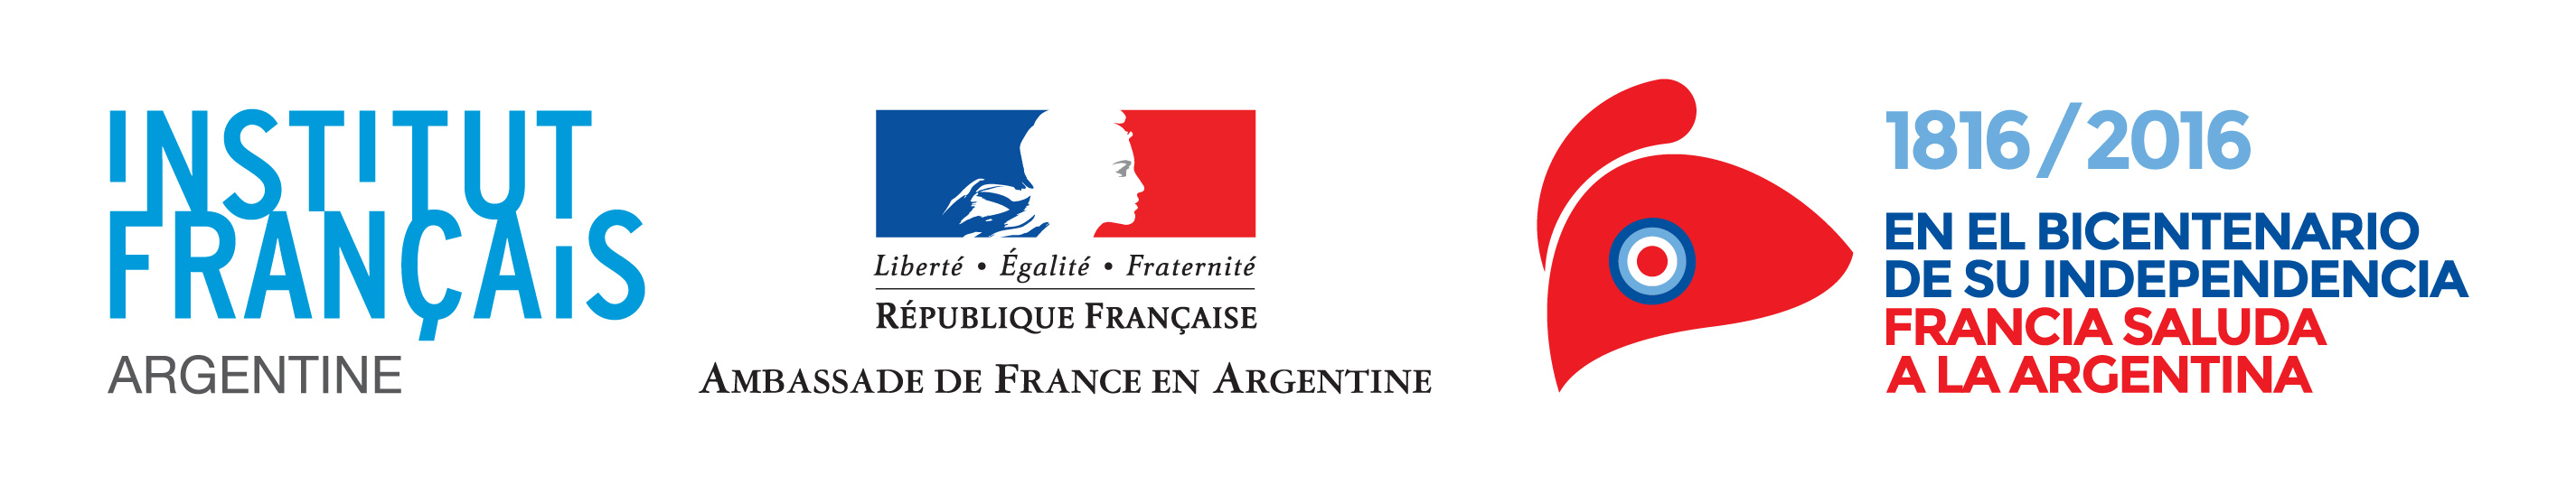 LOGO BICENTENARIO logos franceses completo color